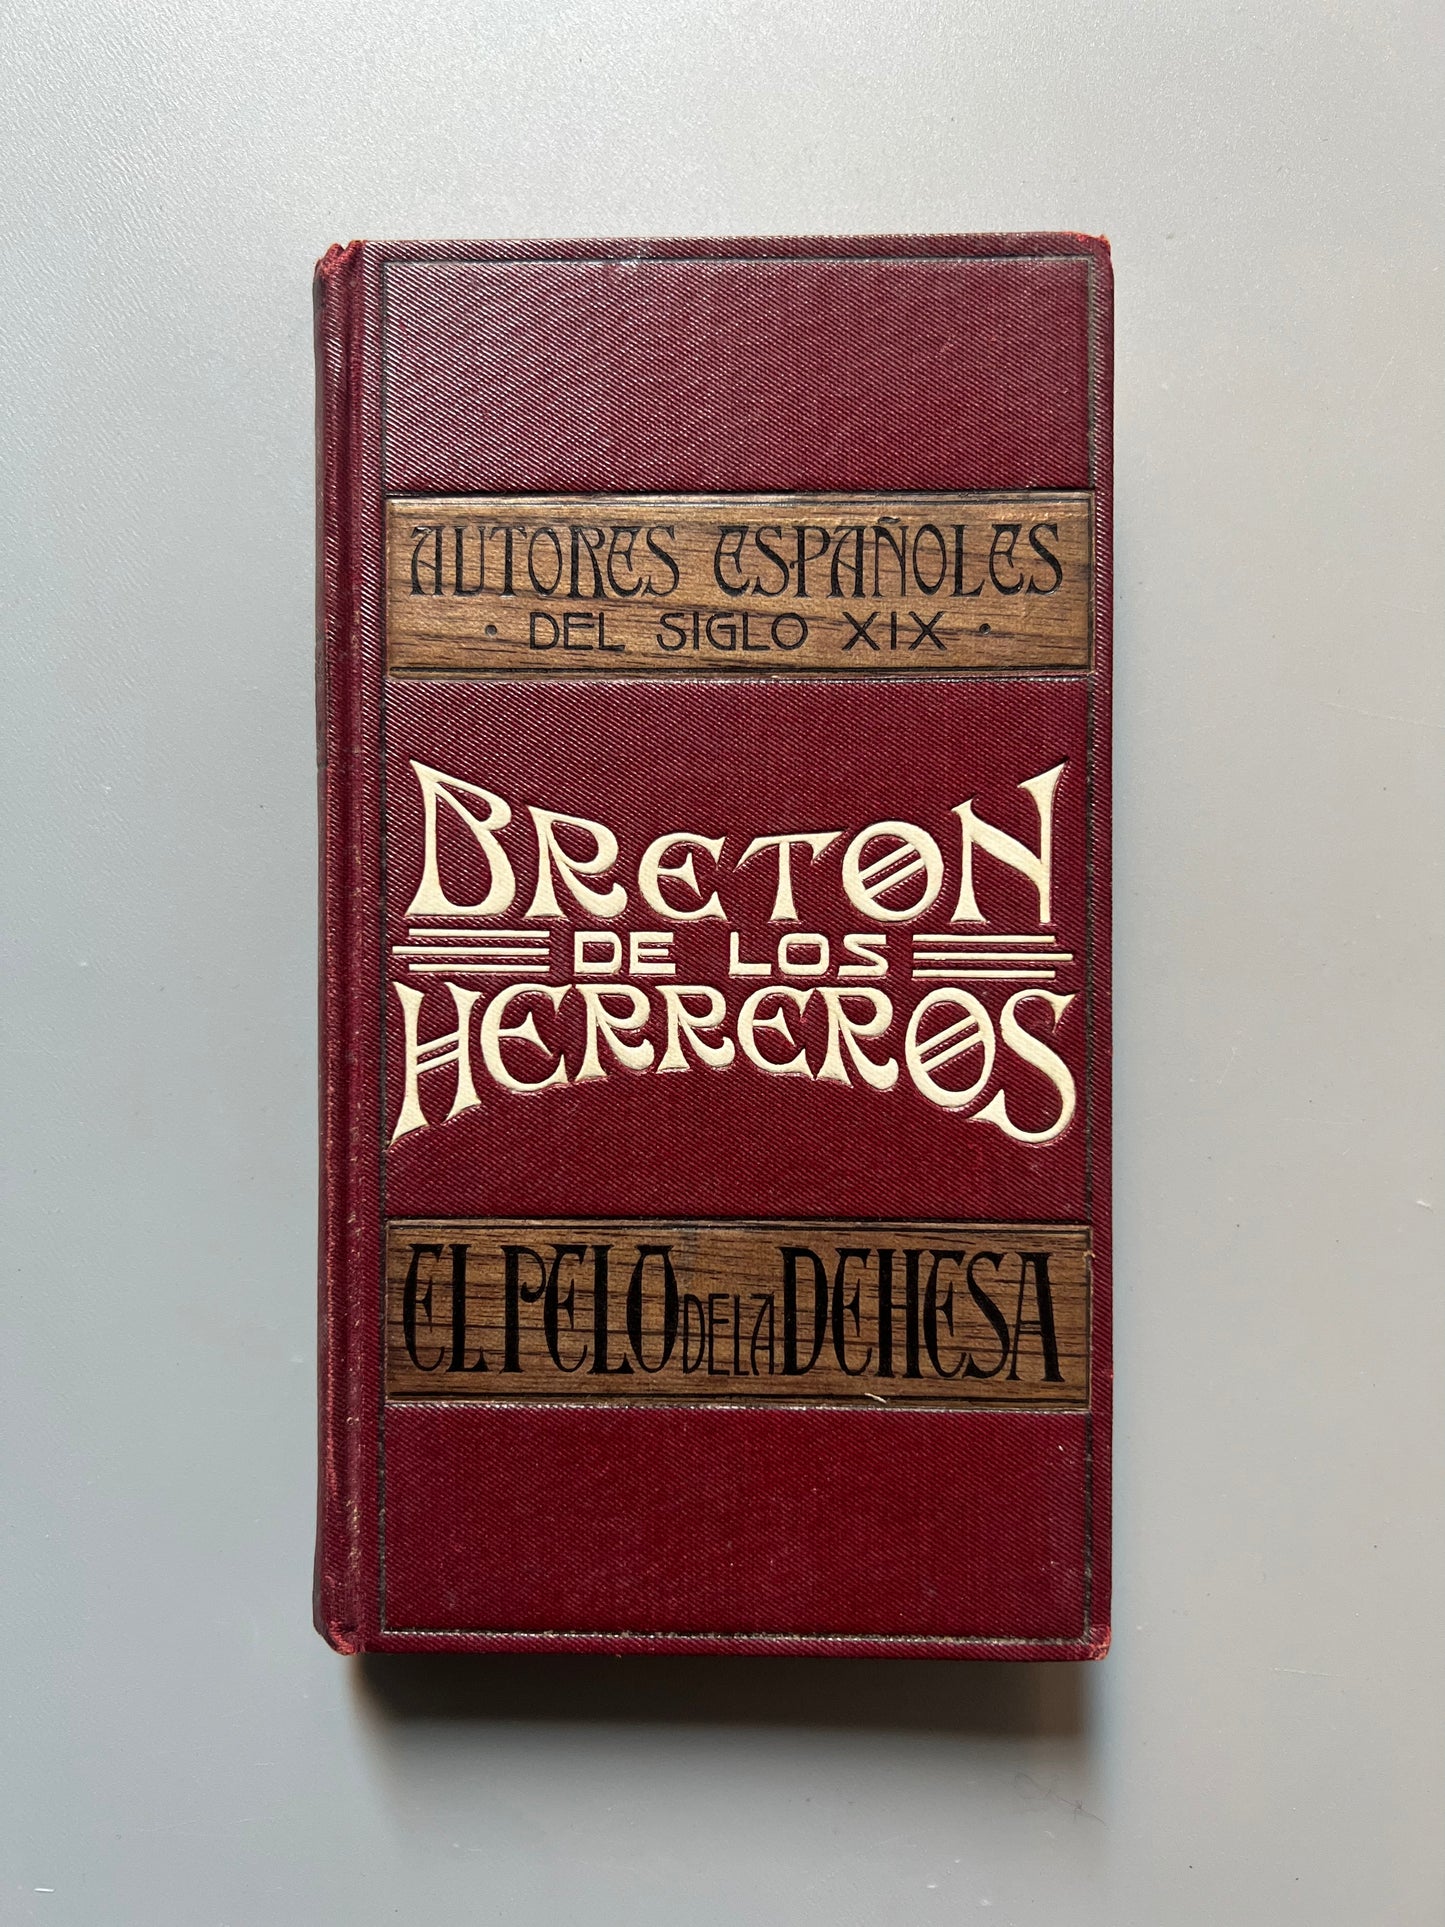 El pelo de la dehesa, Manuel Breton de los Herreros - E. Domenech, 1915